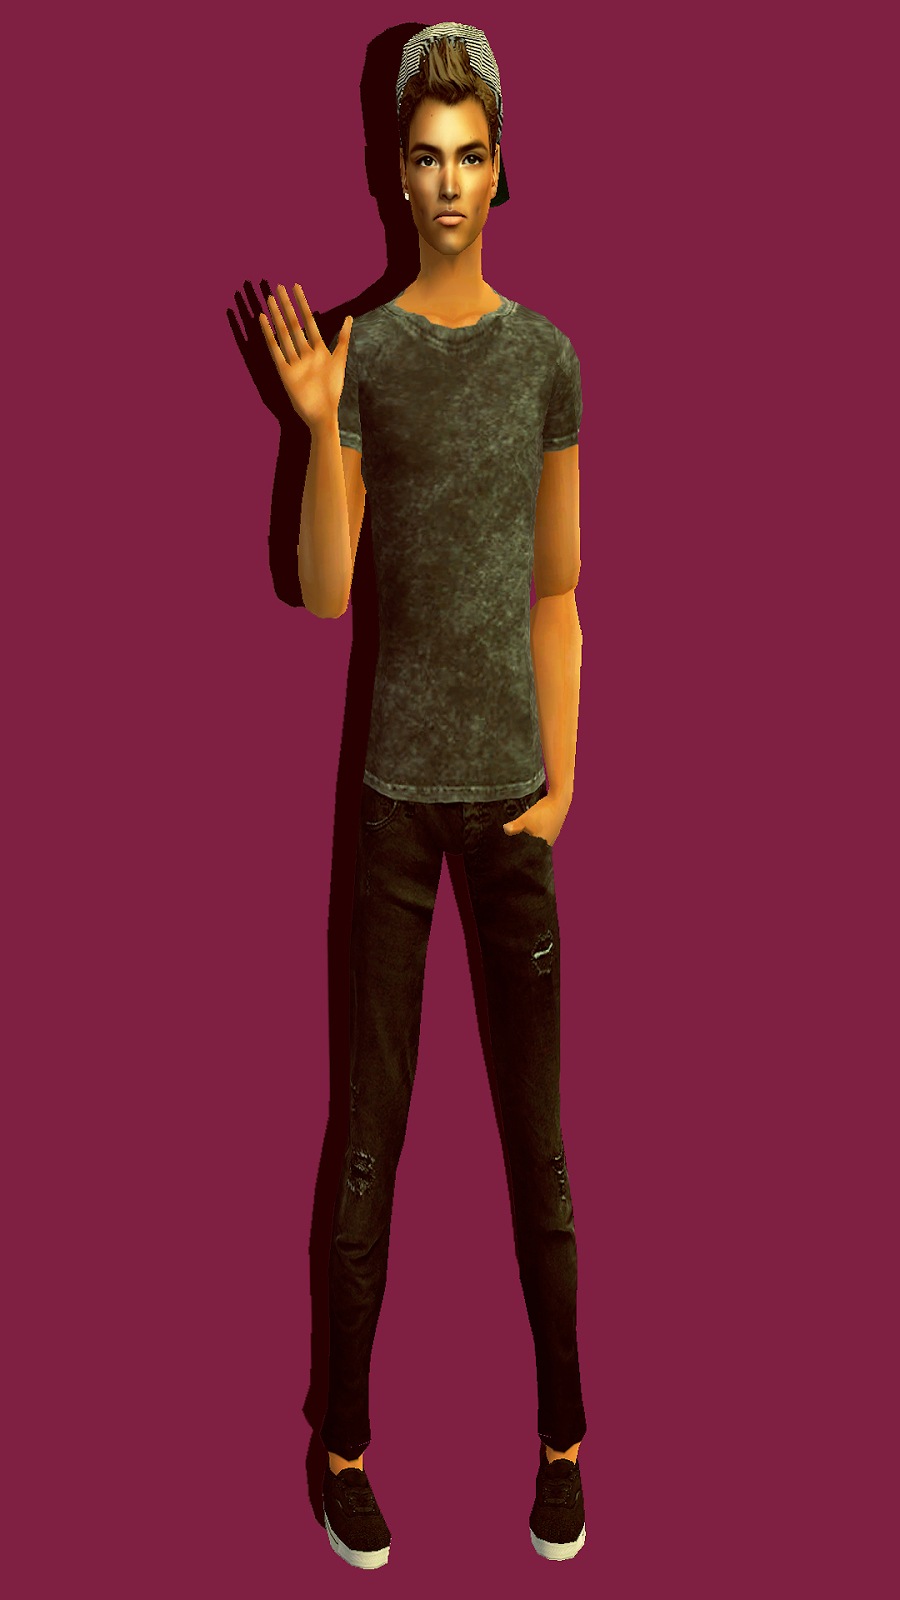  The Sims 2. Мужская одежда: повседневная. - Страница 22 2a